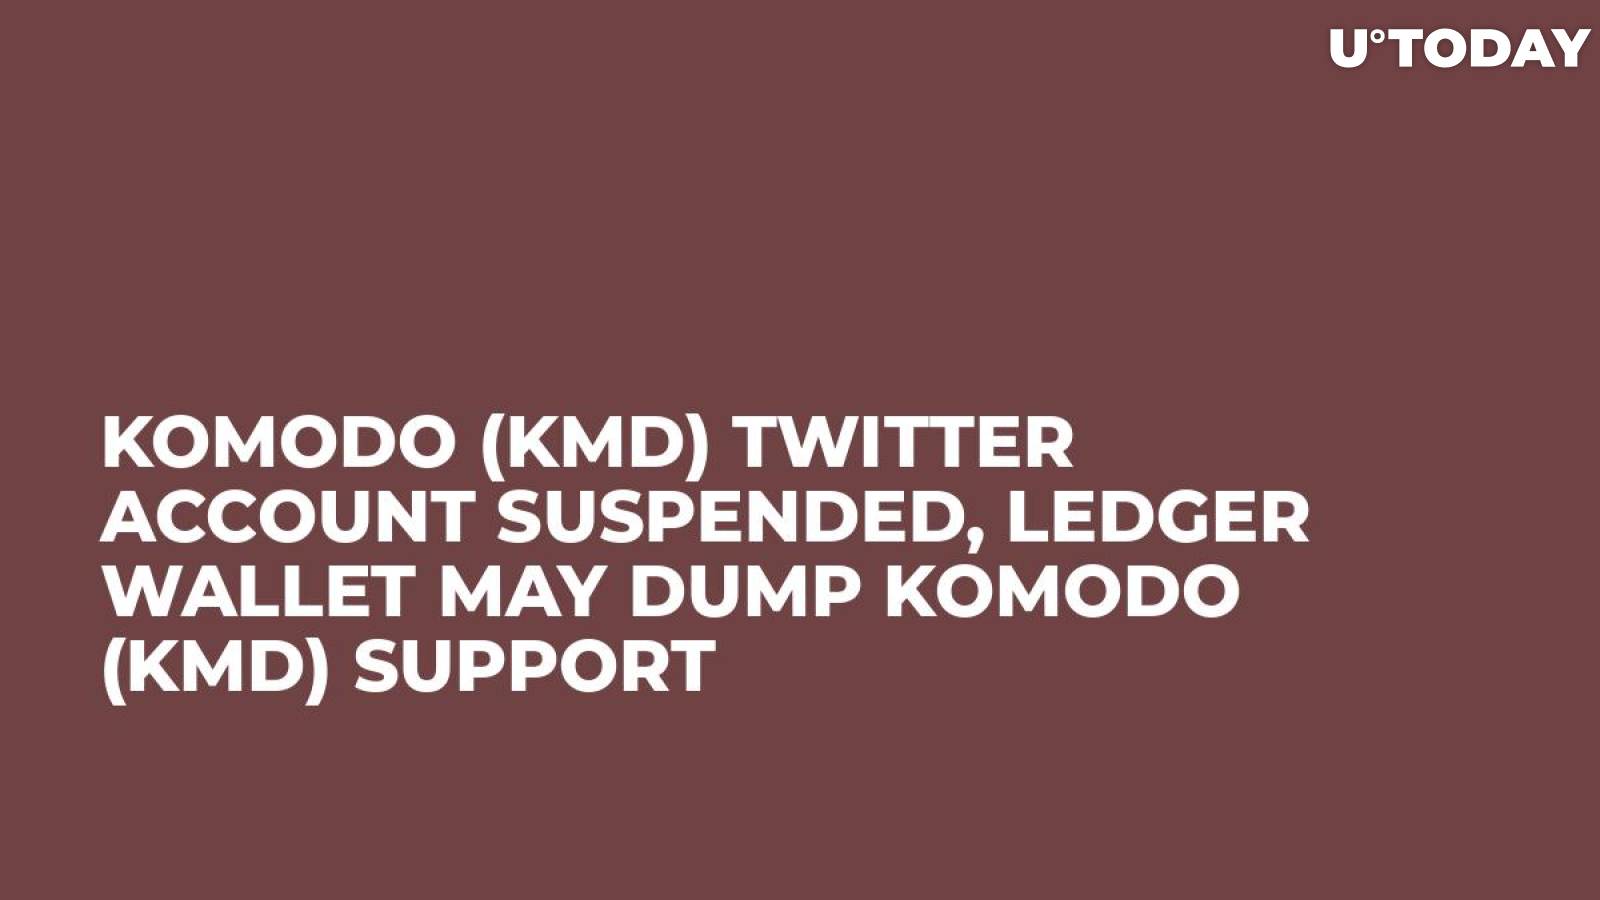 Komodo (KMD) Twitter Account Suspended, Ledger Wallet May Dump Komodo (KMD) Support